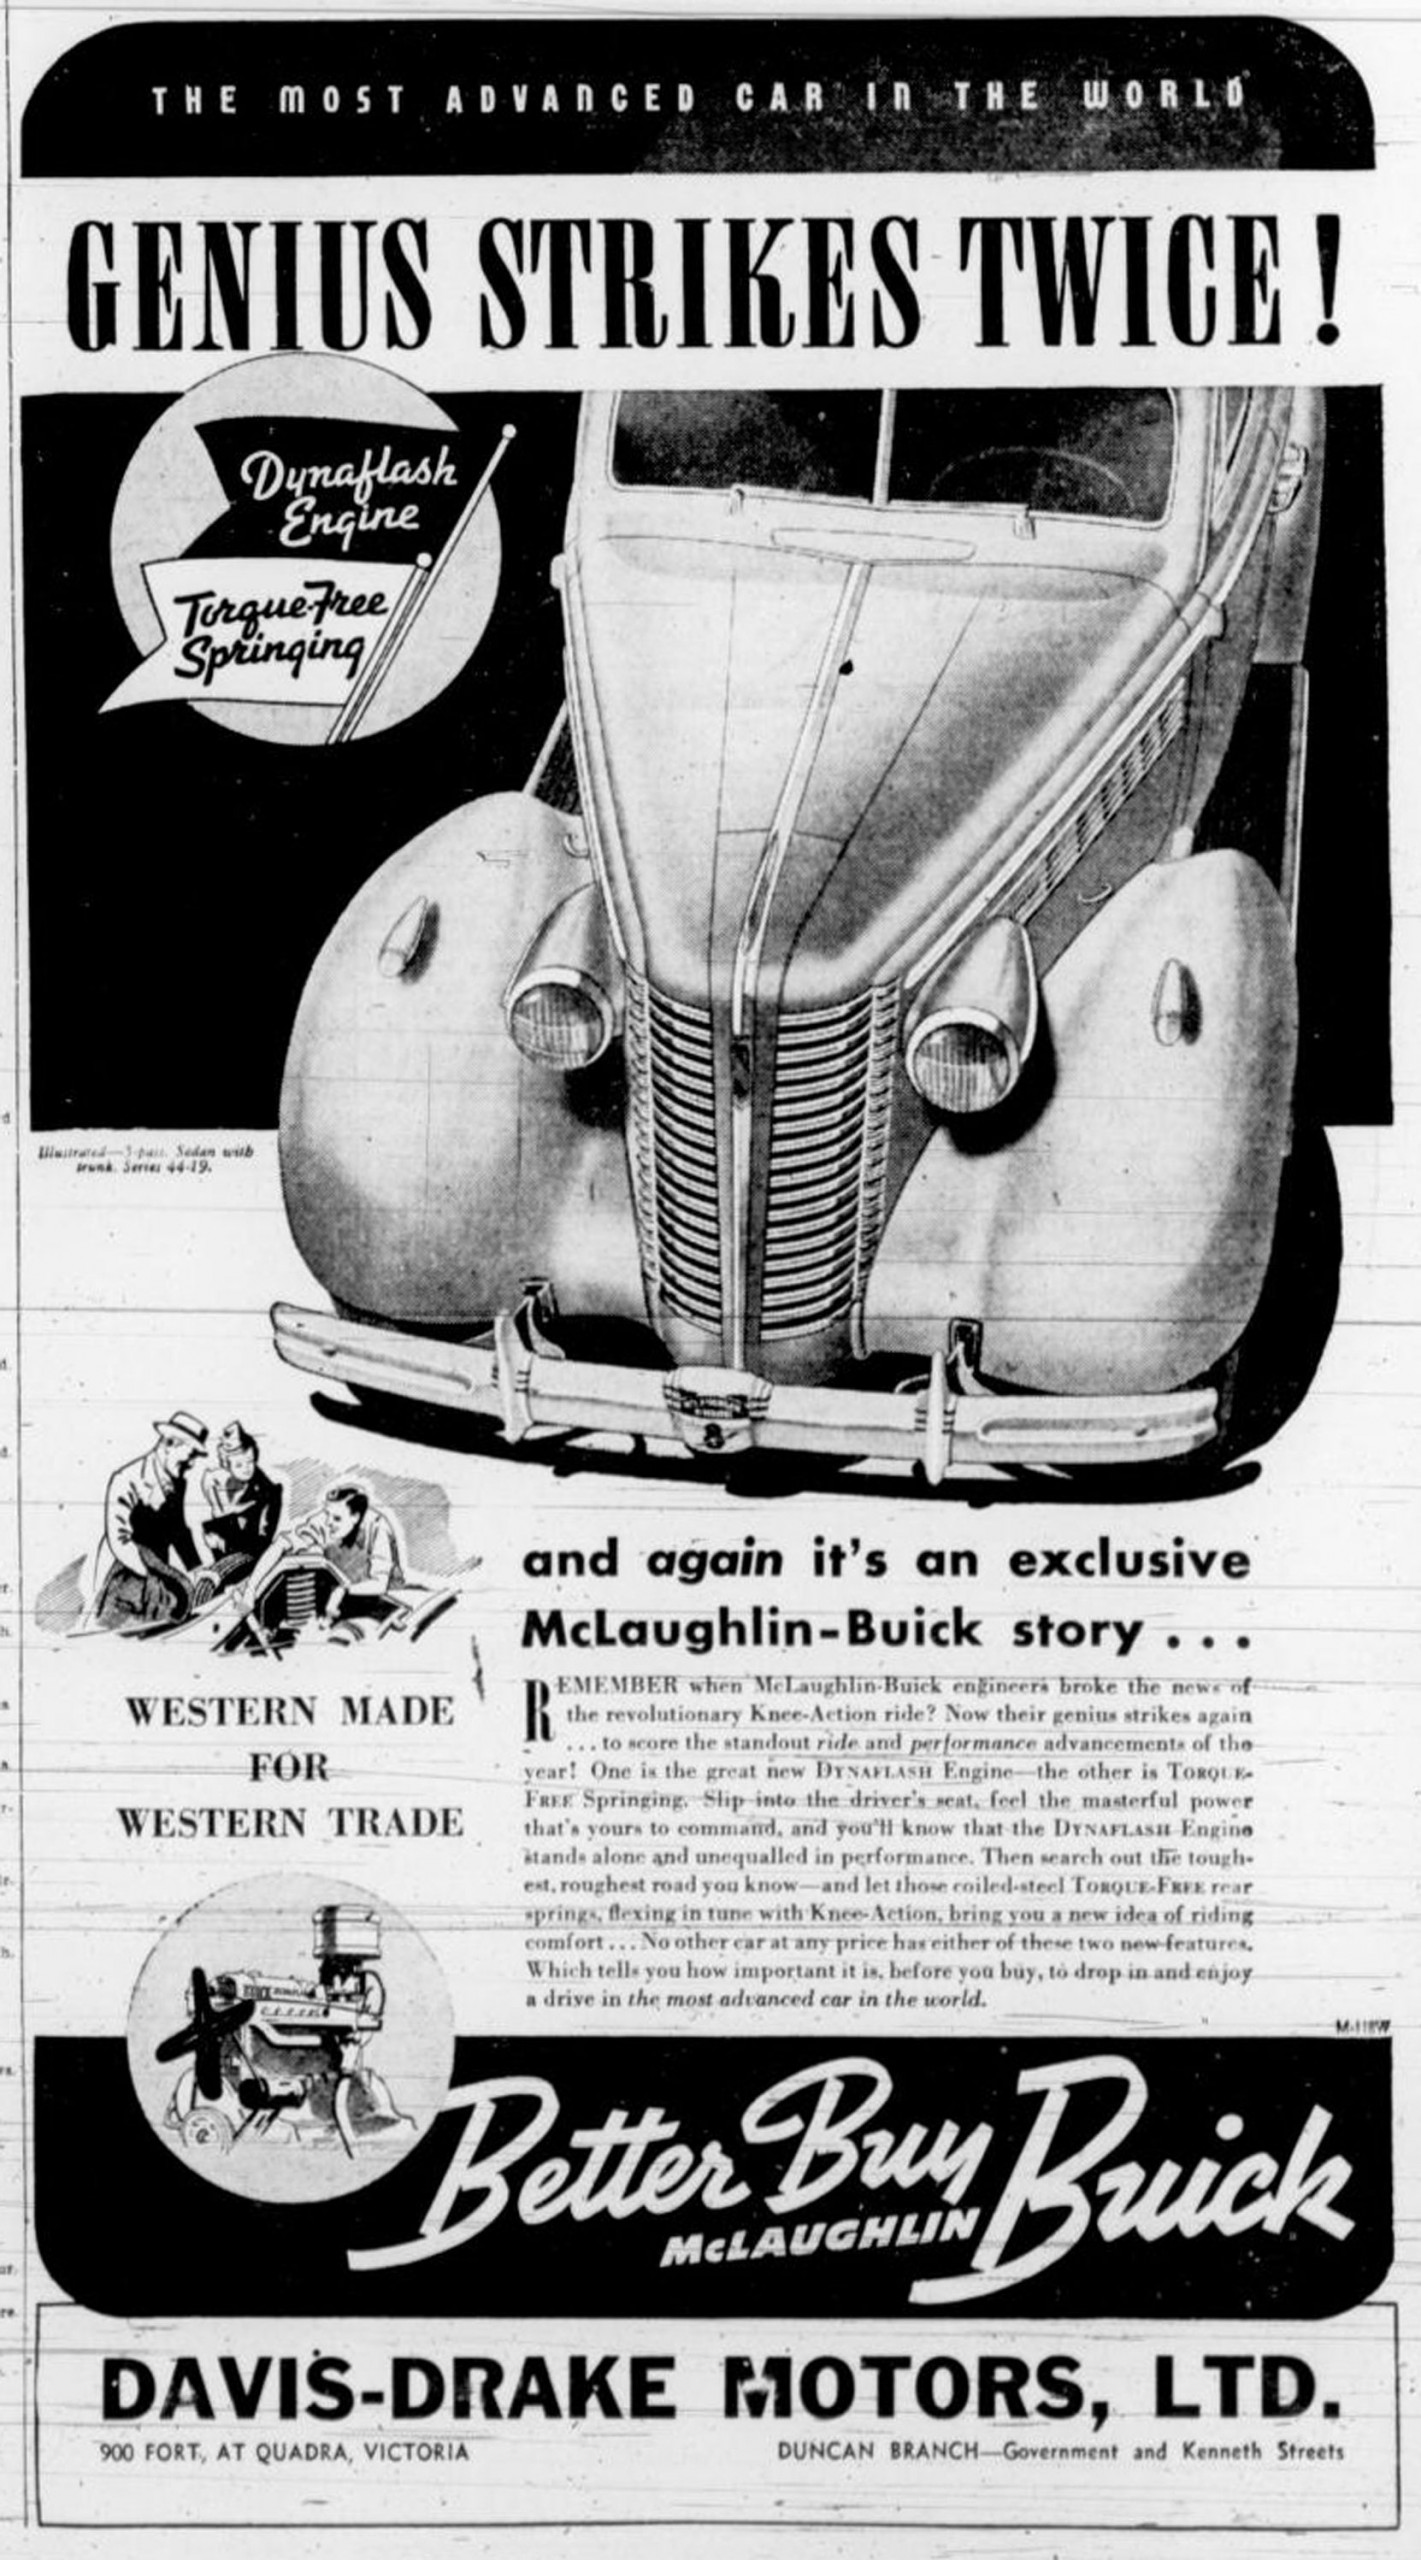 Davis-Drake Motors advertisement for McLaughlin-Buick, December 1939. Davis Drake Motors was located at 900 Fort Street at Quadra Street. (Victoria Online Sightseeing collection) ,